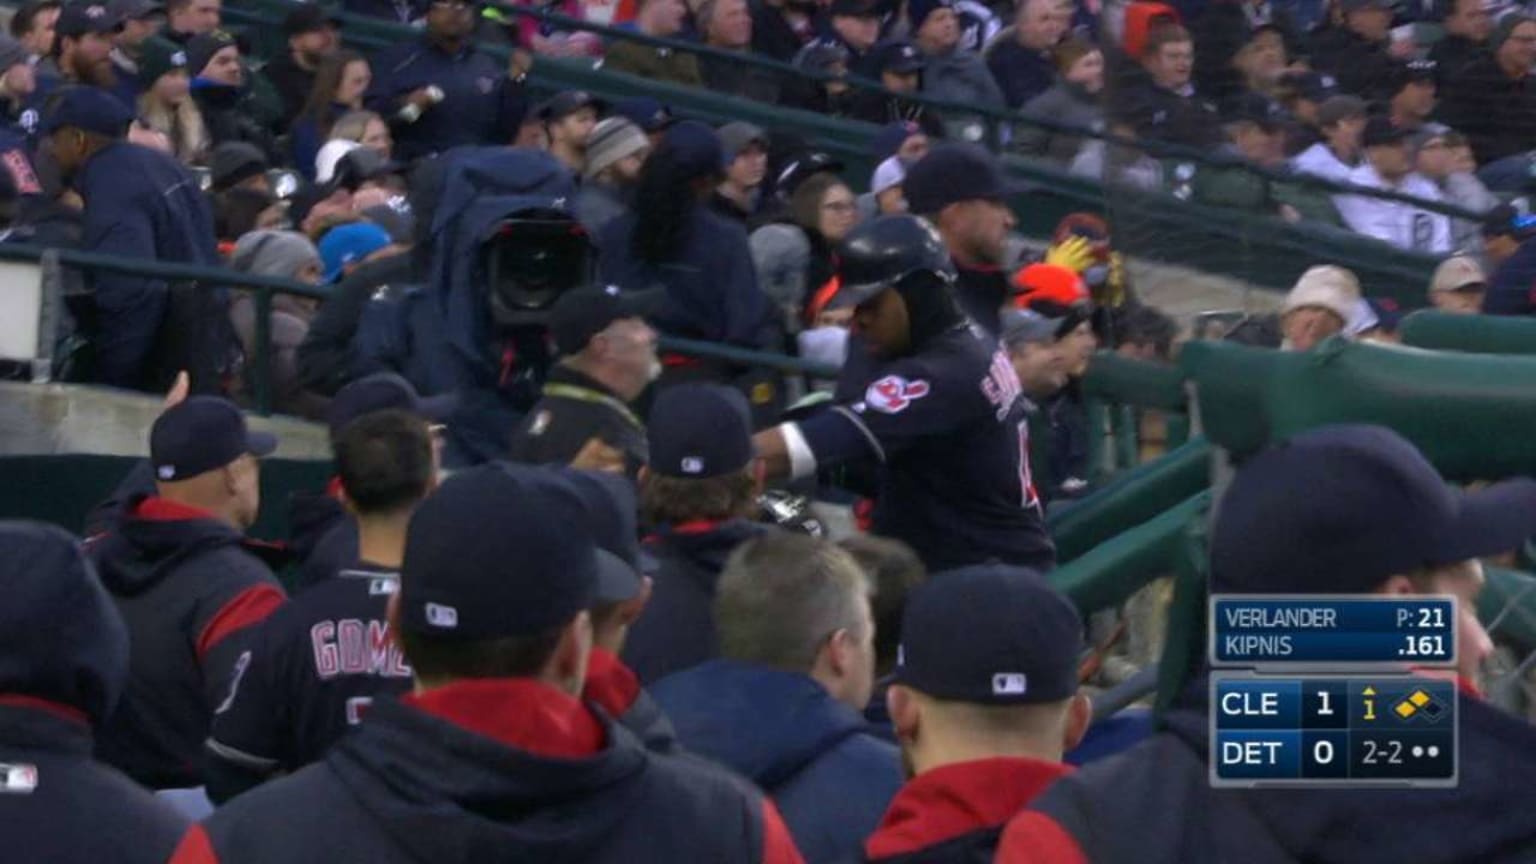 Red Sox Fan Gives Foul Ball To Young Yankees Fan In Heartwarming